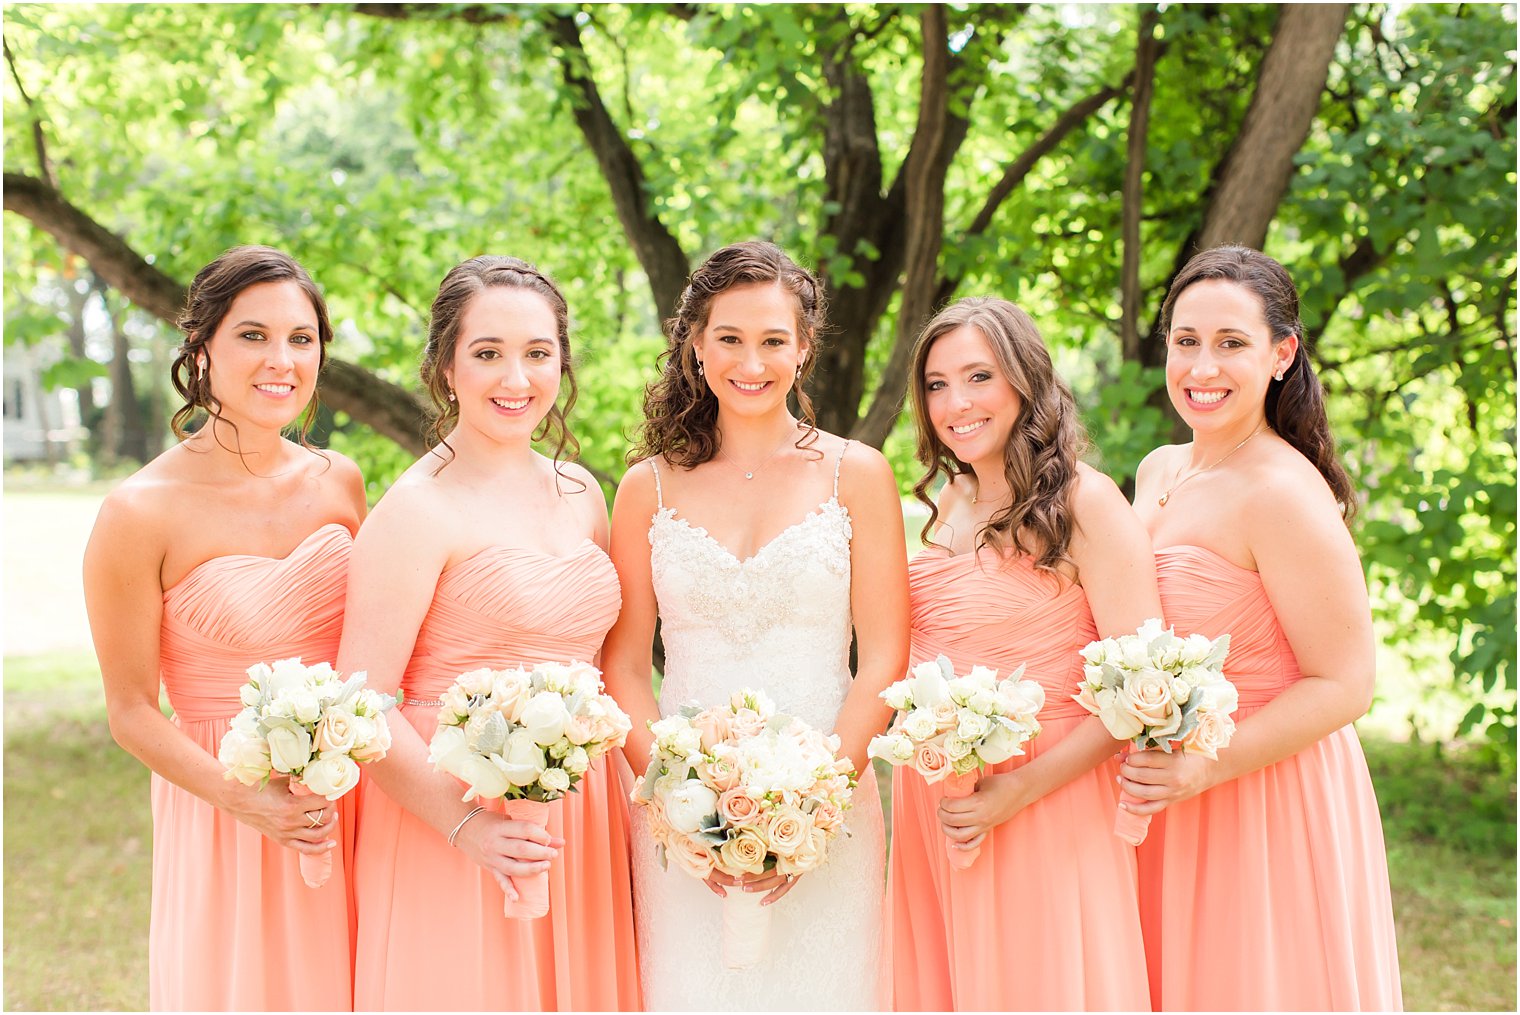 Bridesmaids in Donna Morgan peach dresses